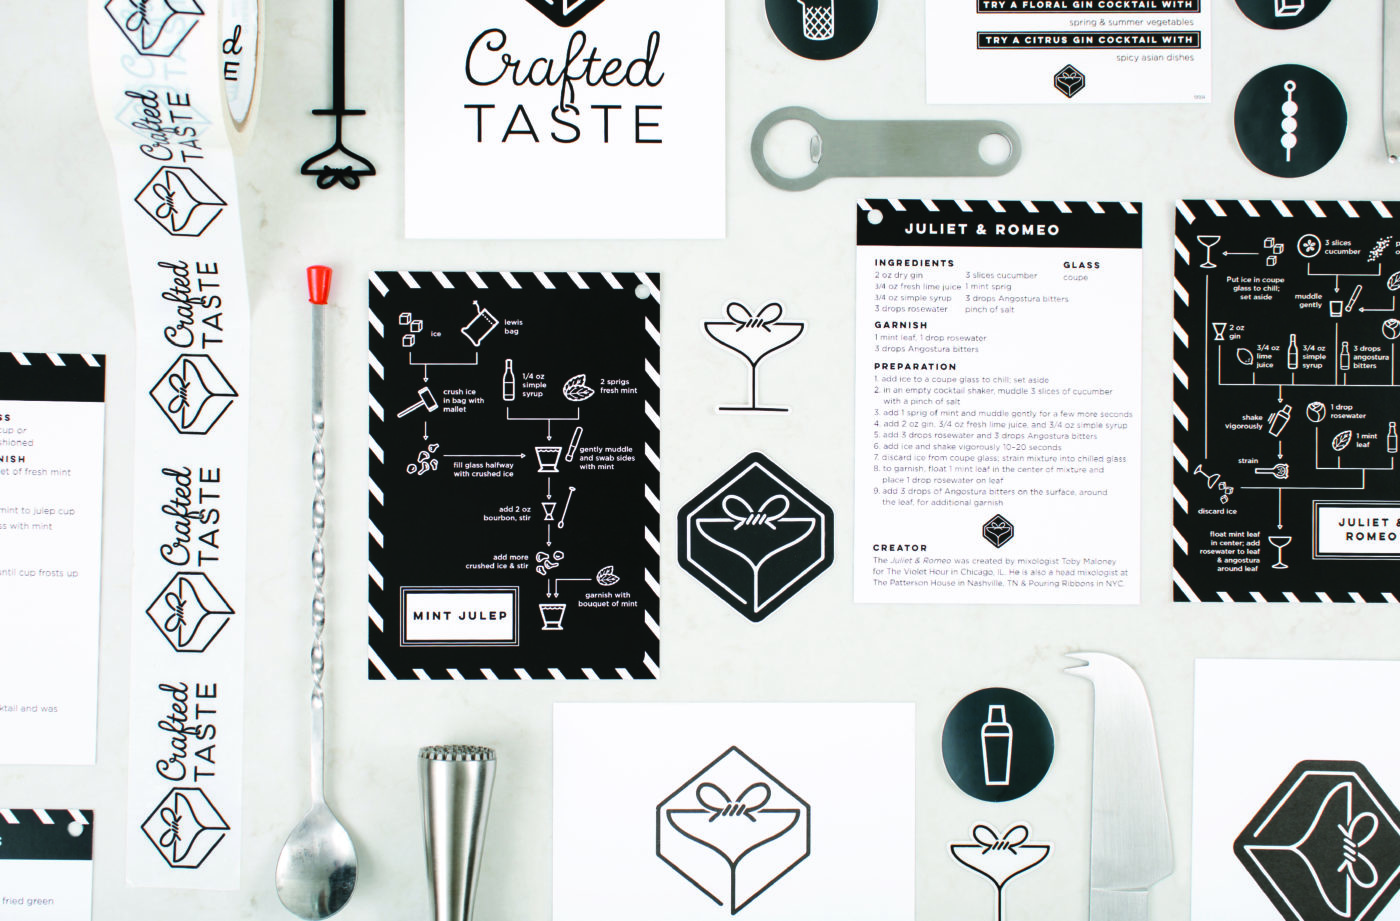 Crafted Taste Branding by CODO Design.